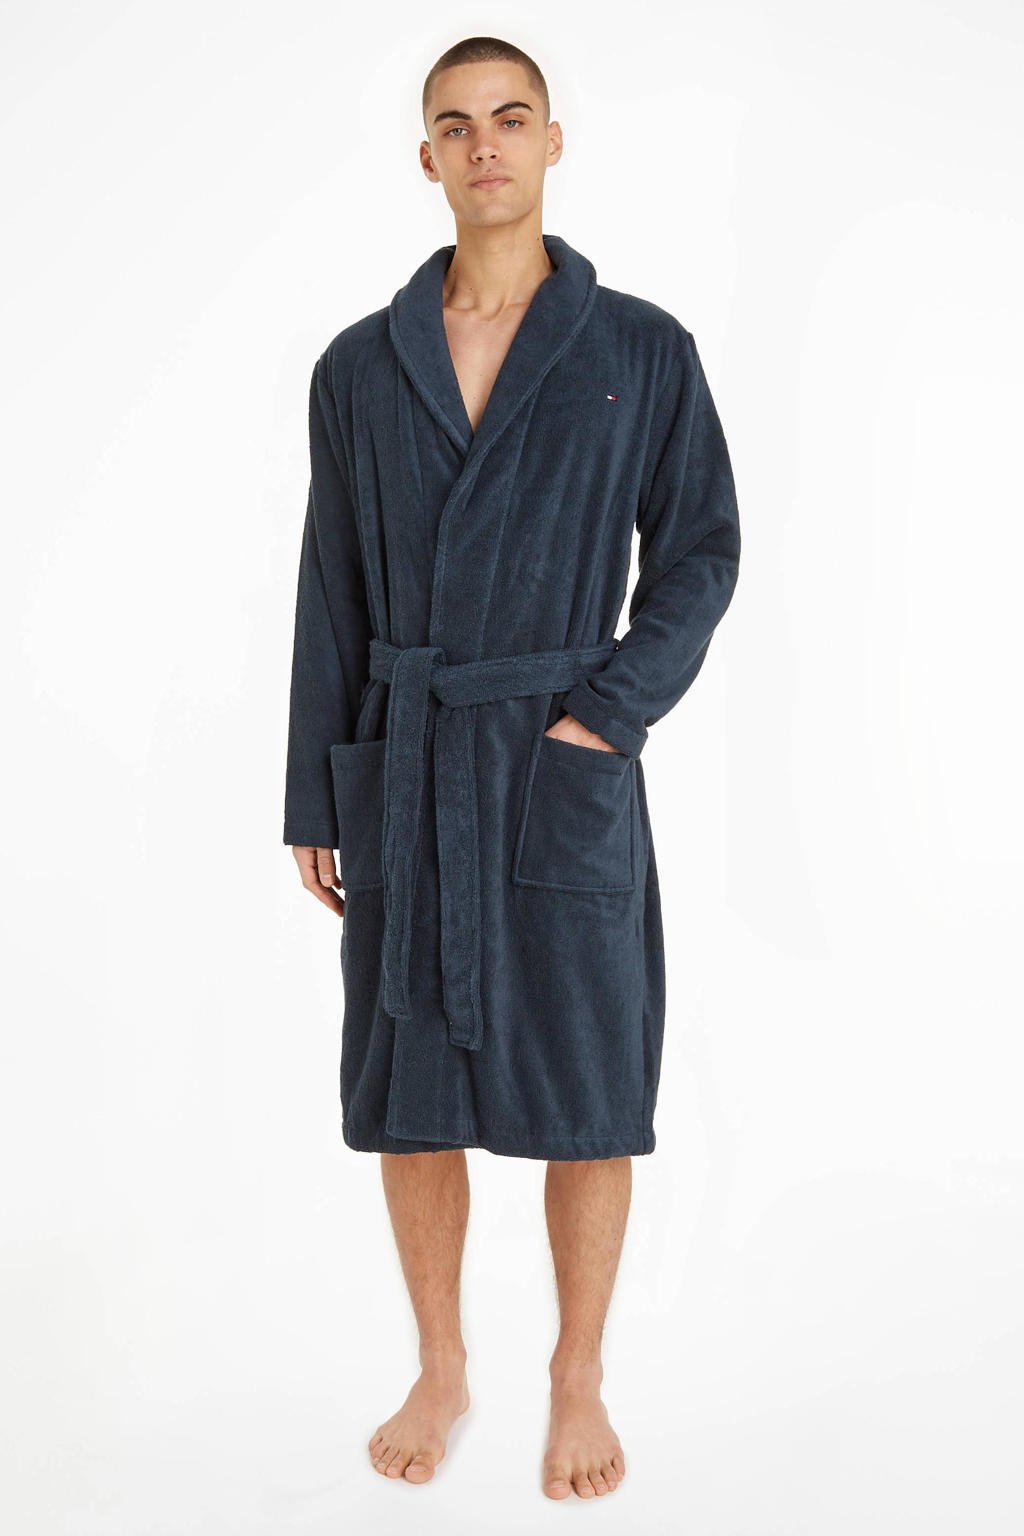 Tommy Hilfiger badstof badjas donkerblauw